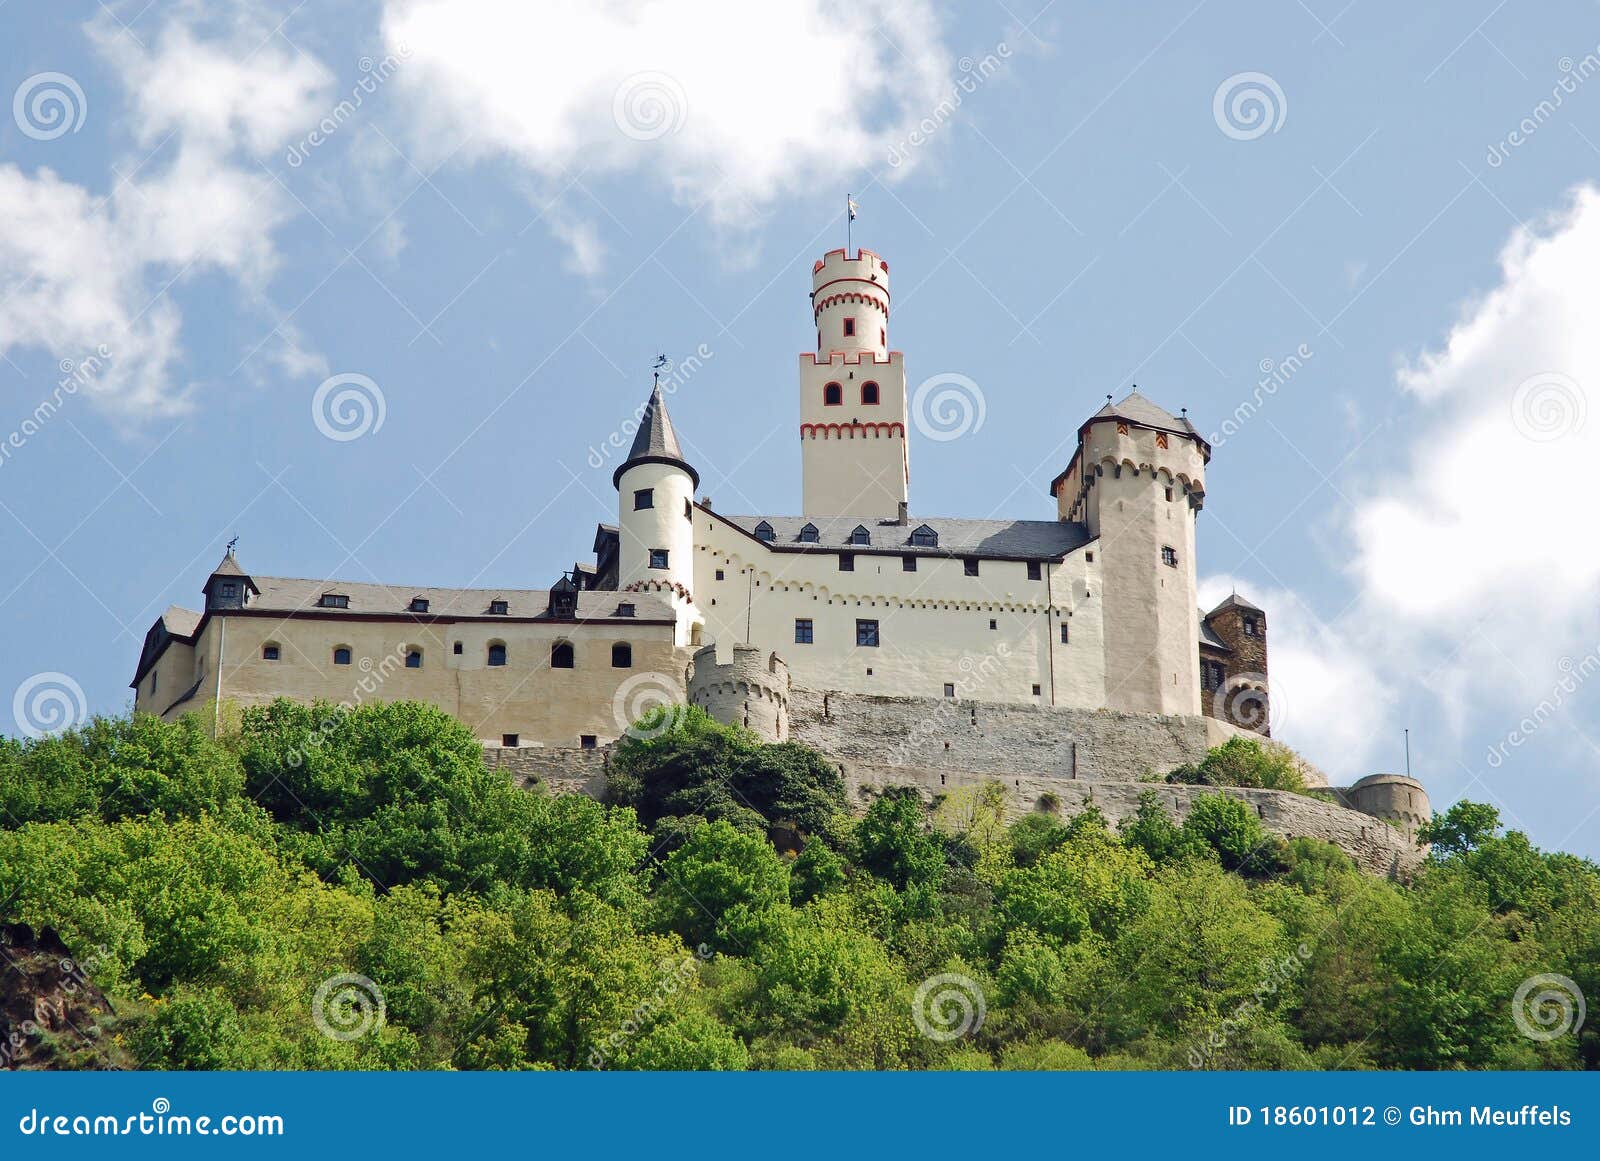 vieuw on marksburg castle, braubach, germany